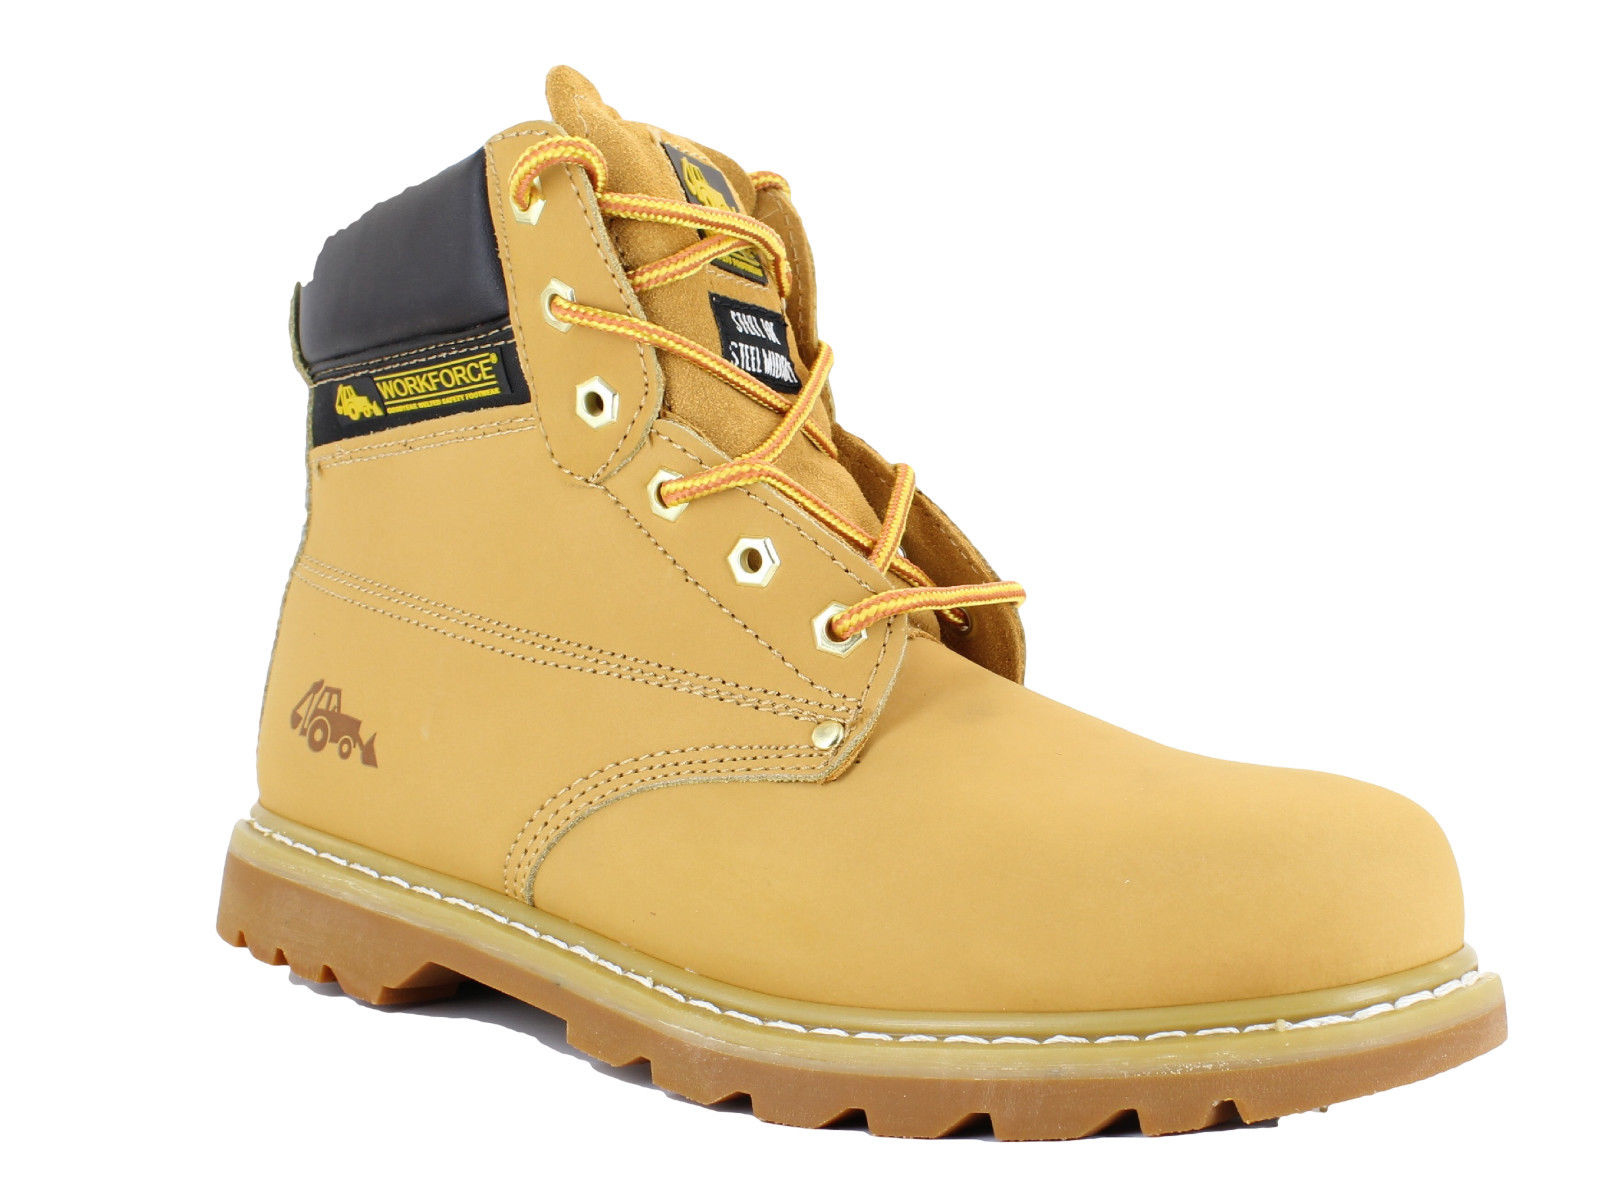 WorkForce Mens Honey SPB Safety Steel Toe and MidSole Boots | eBay